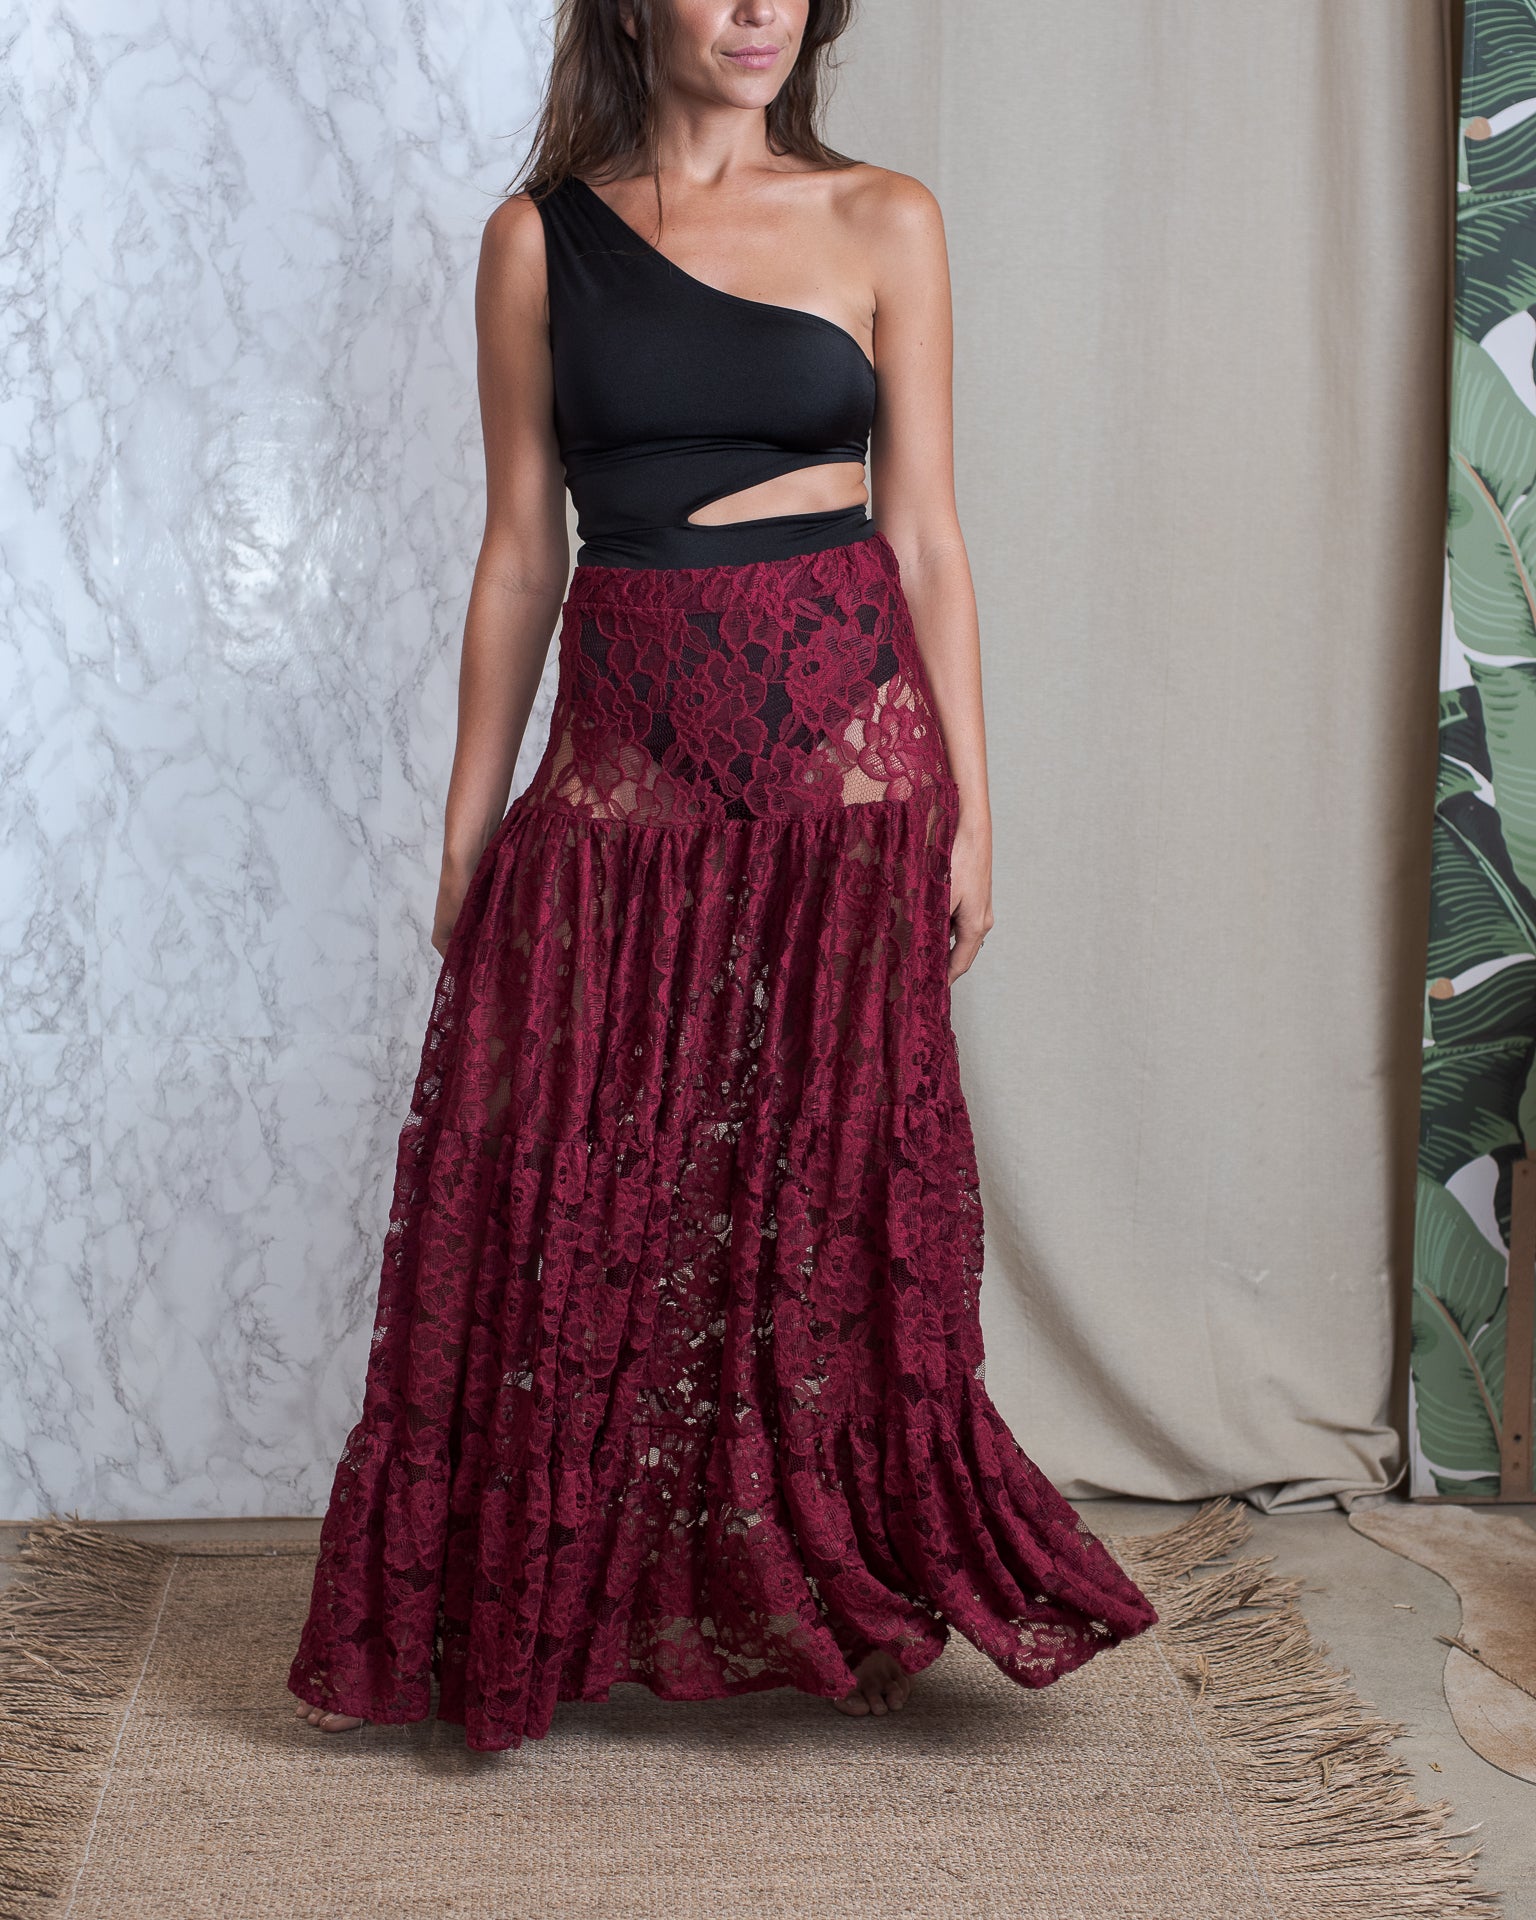 Antigua Skirt Macarena Burgundy Lace